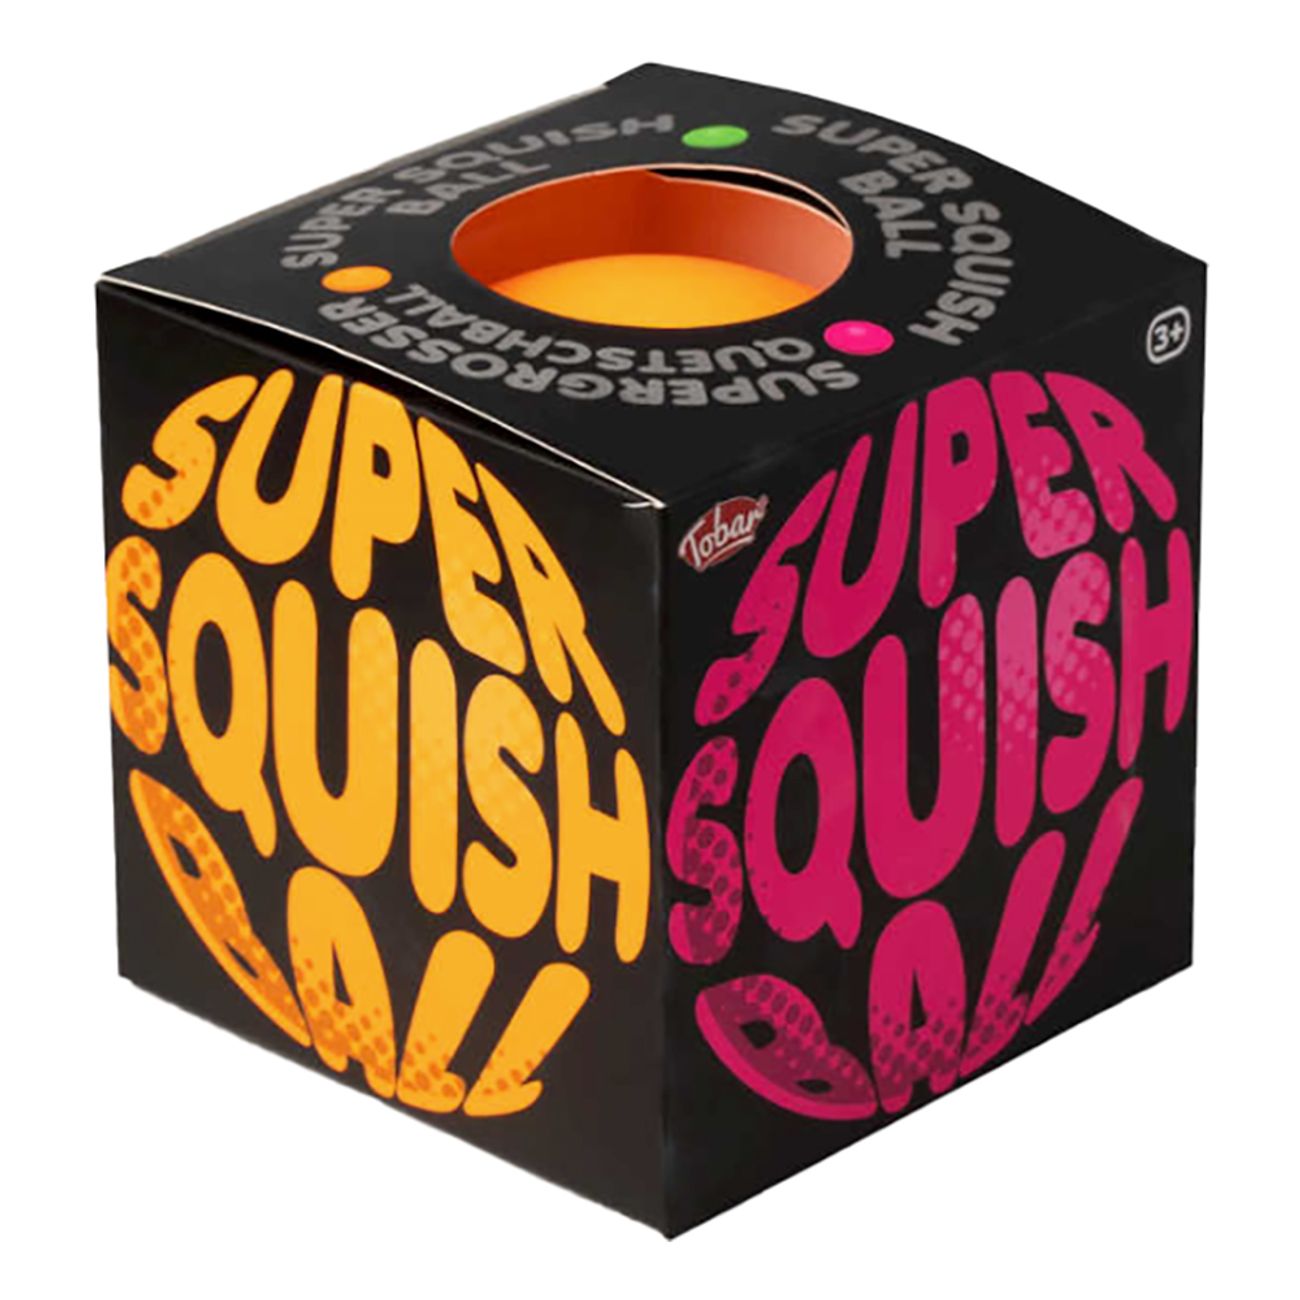 squish-ball-super-90632-2